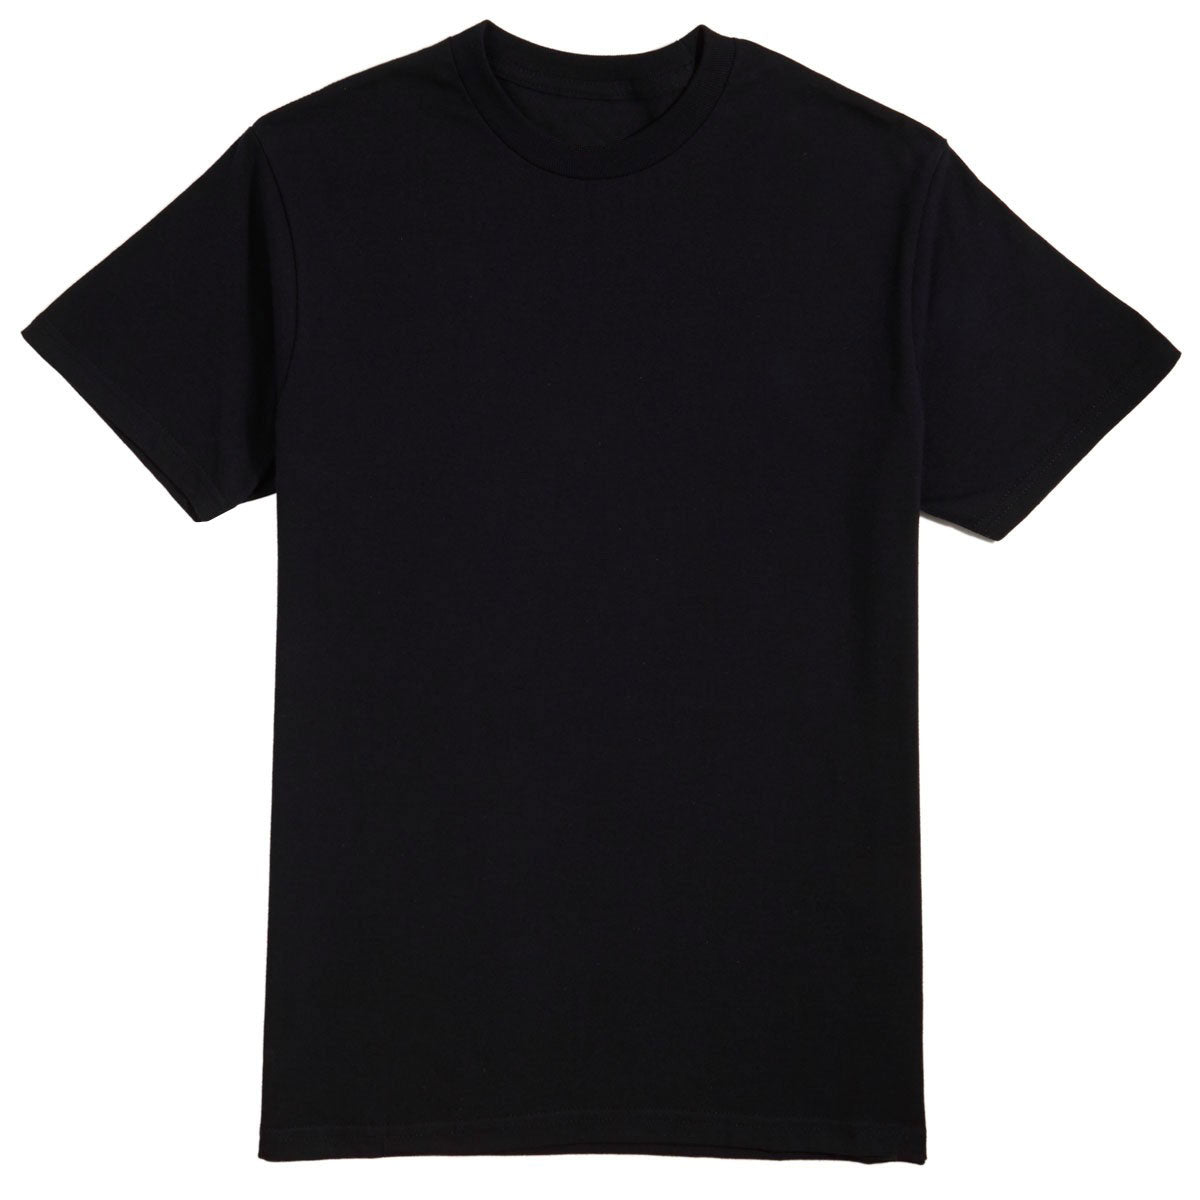 Converse Spider Web T-Shirt - Black - LG image 1